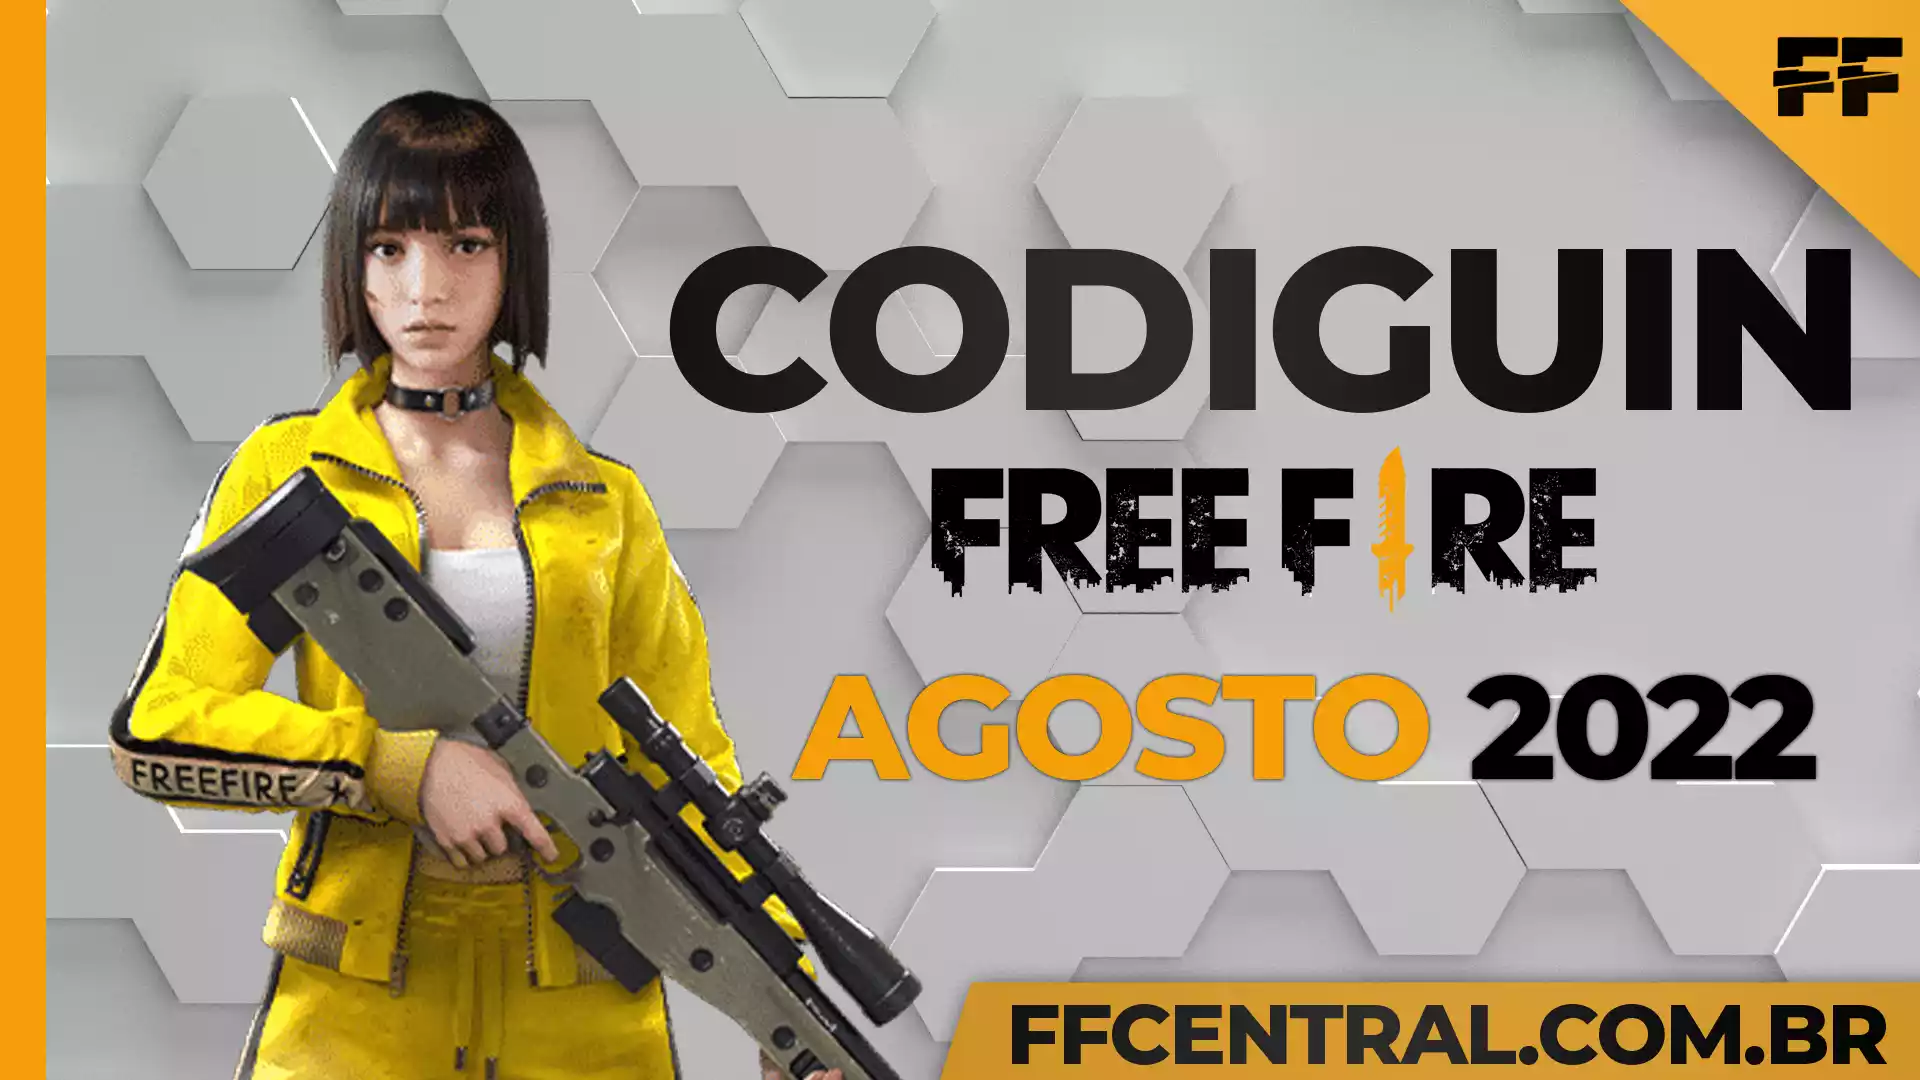 CODIGUIN FF 2022 Códigos Free Fire ativos para resgatar no Rewards Garena Agosto 2022